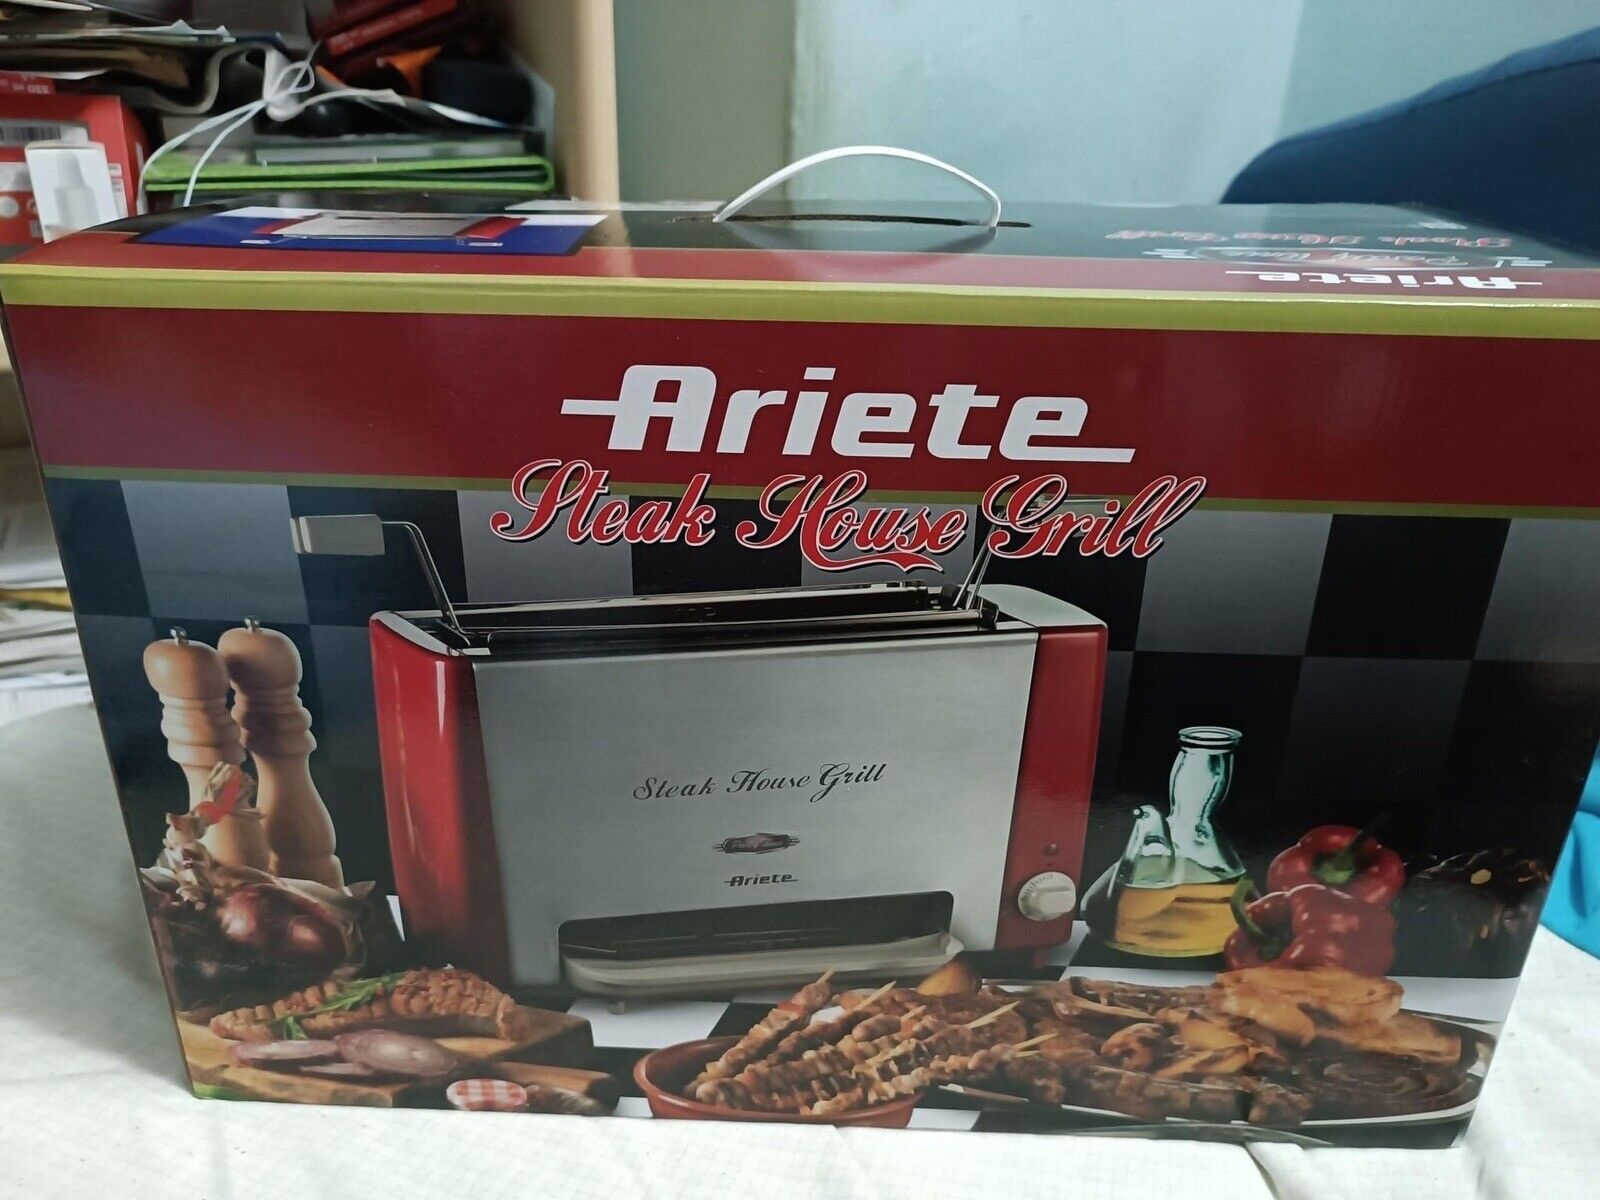 ariete steak house grill (0730) - piastra elettrica verticale - timer 30 min - 1300w